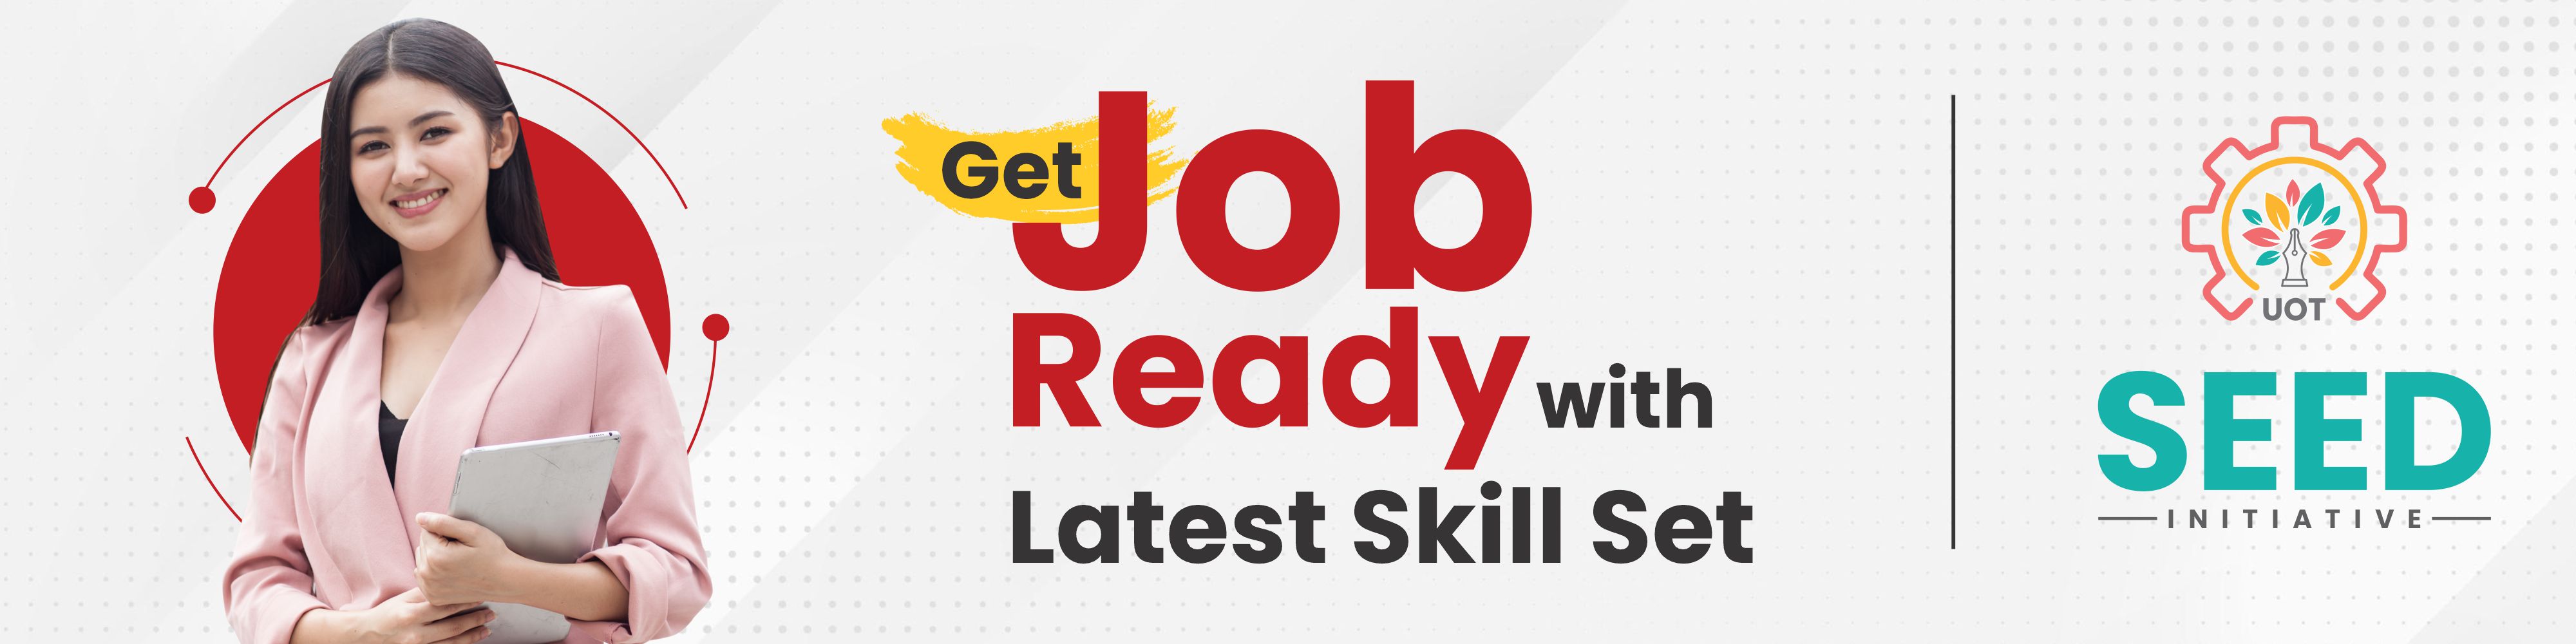 Get Job Ready with Latest Skill Set